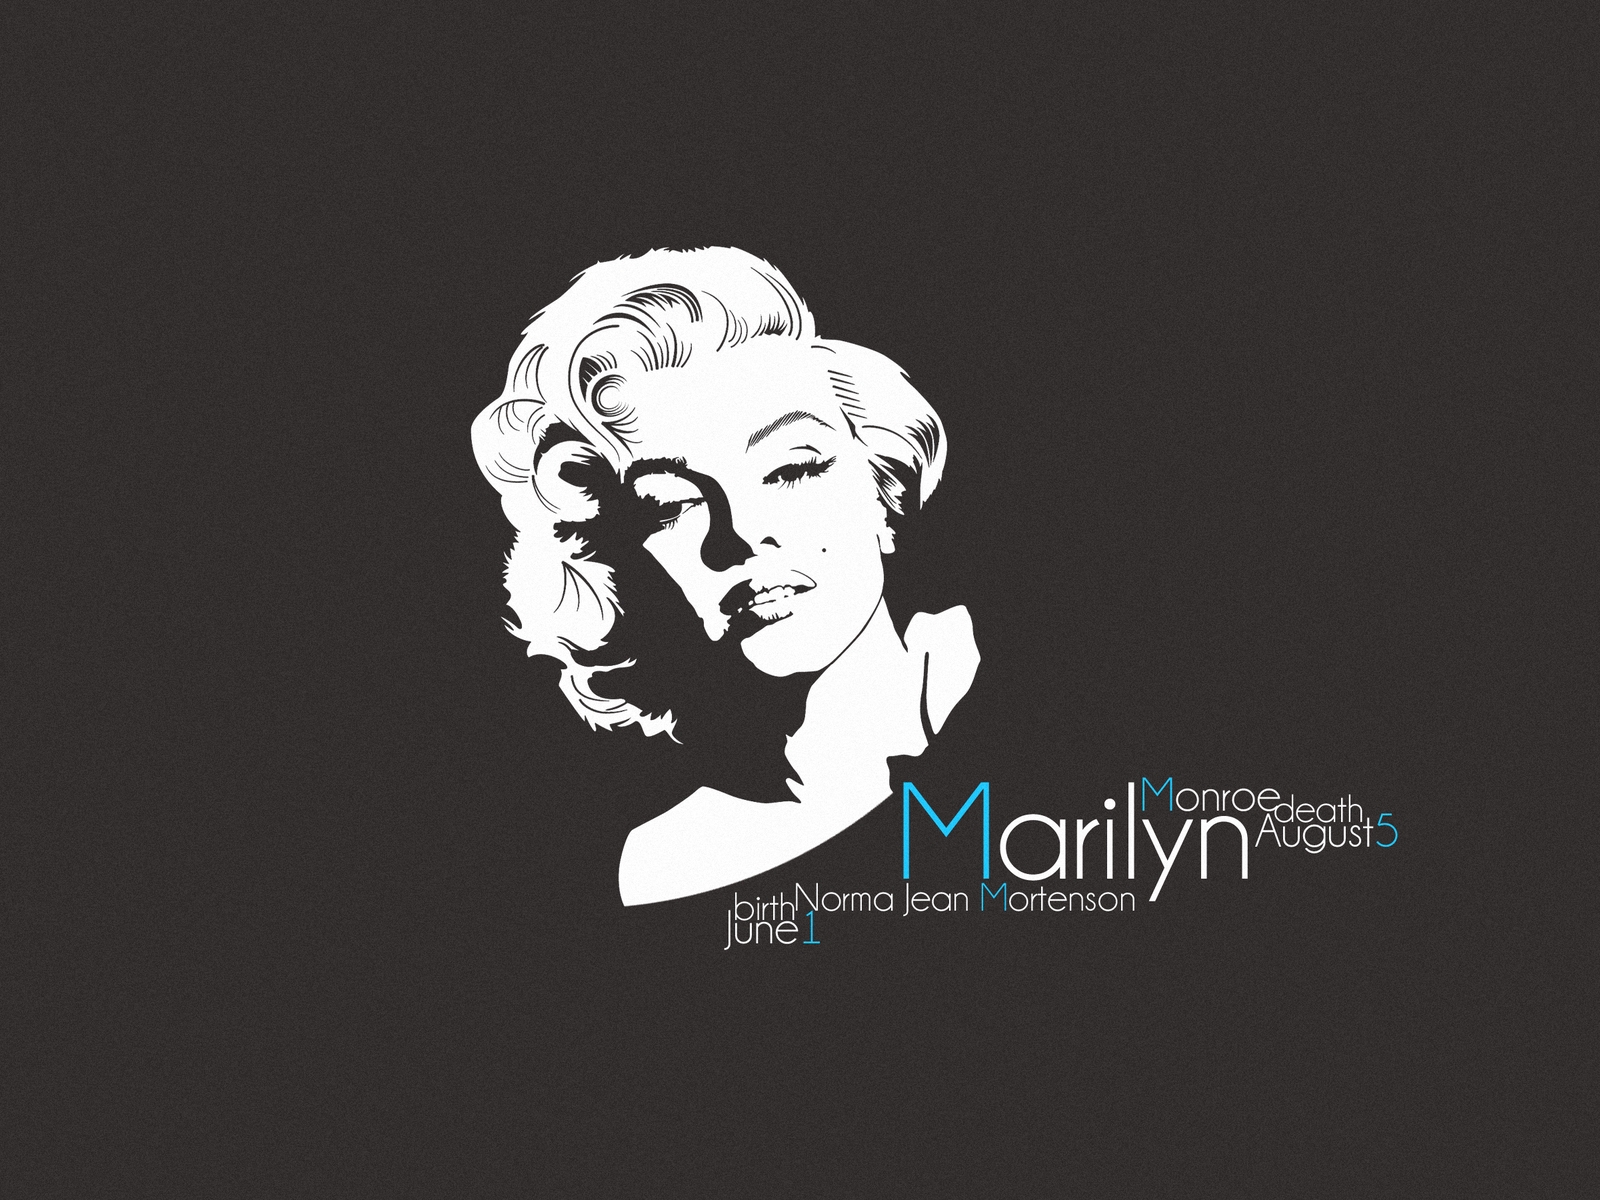 Marilyn Monroe for 1600 x 1200 resolution